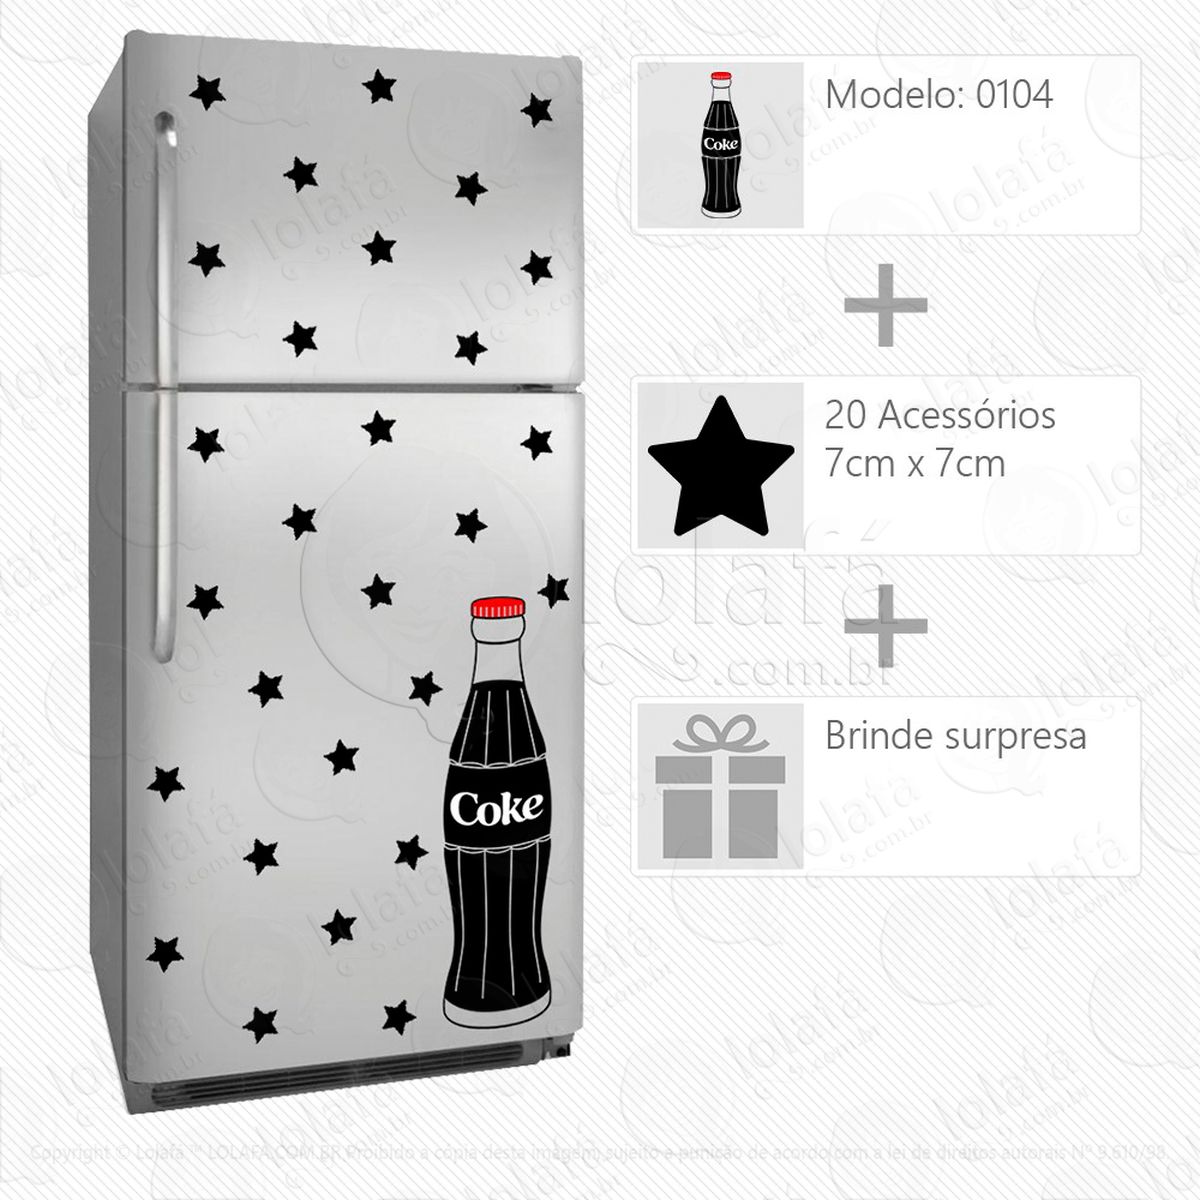 coca-cola adesivo para geladeira e frigobar - mod:104